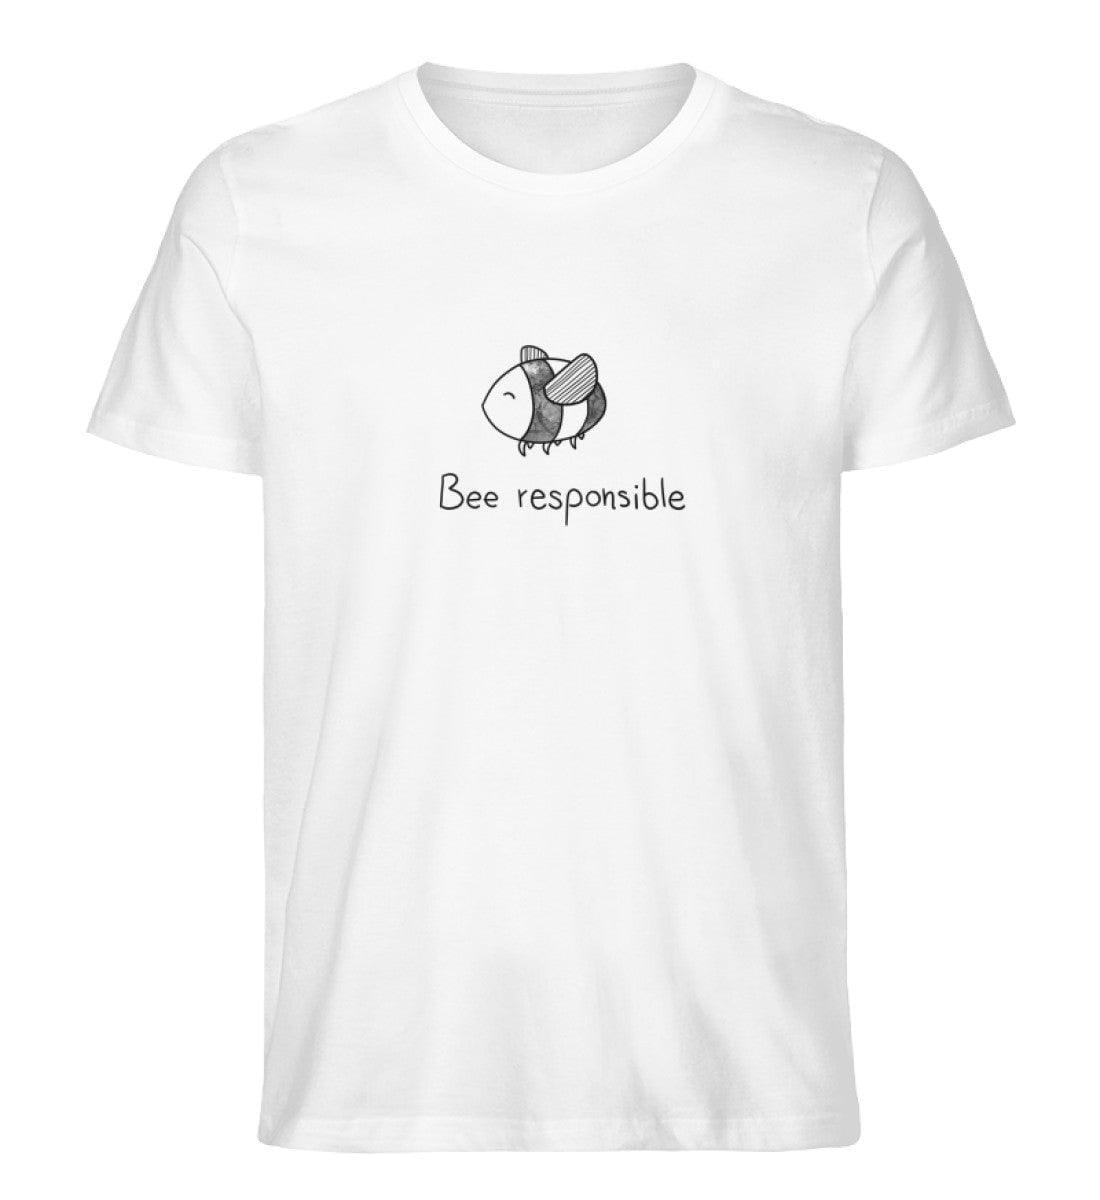 Bee responsible [Herr Tierfreund] - Unisex Organic Shirt Rocker T-Shirt ST/ST Shirtee White S 